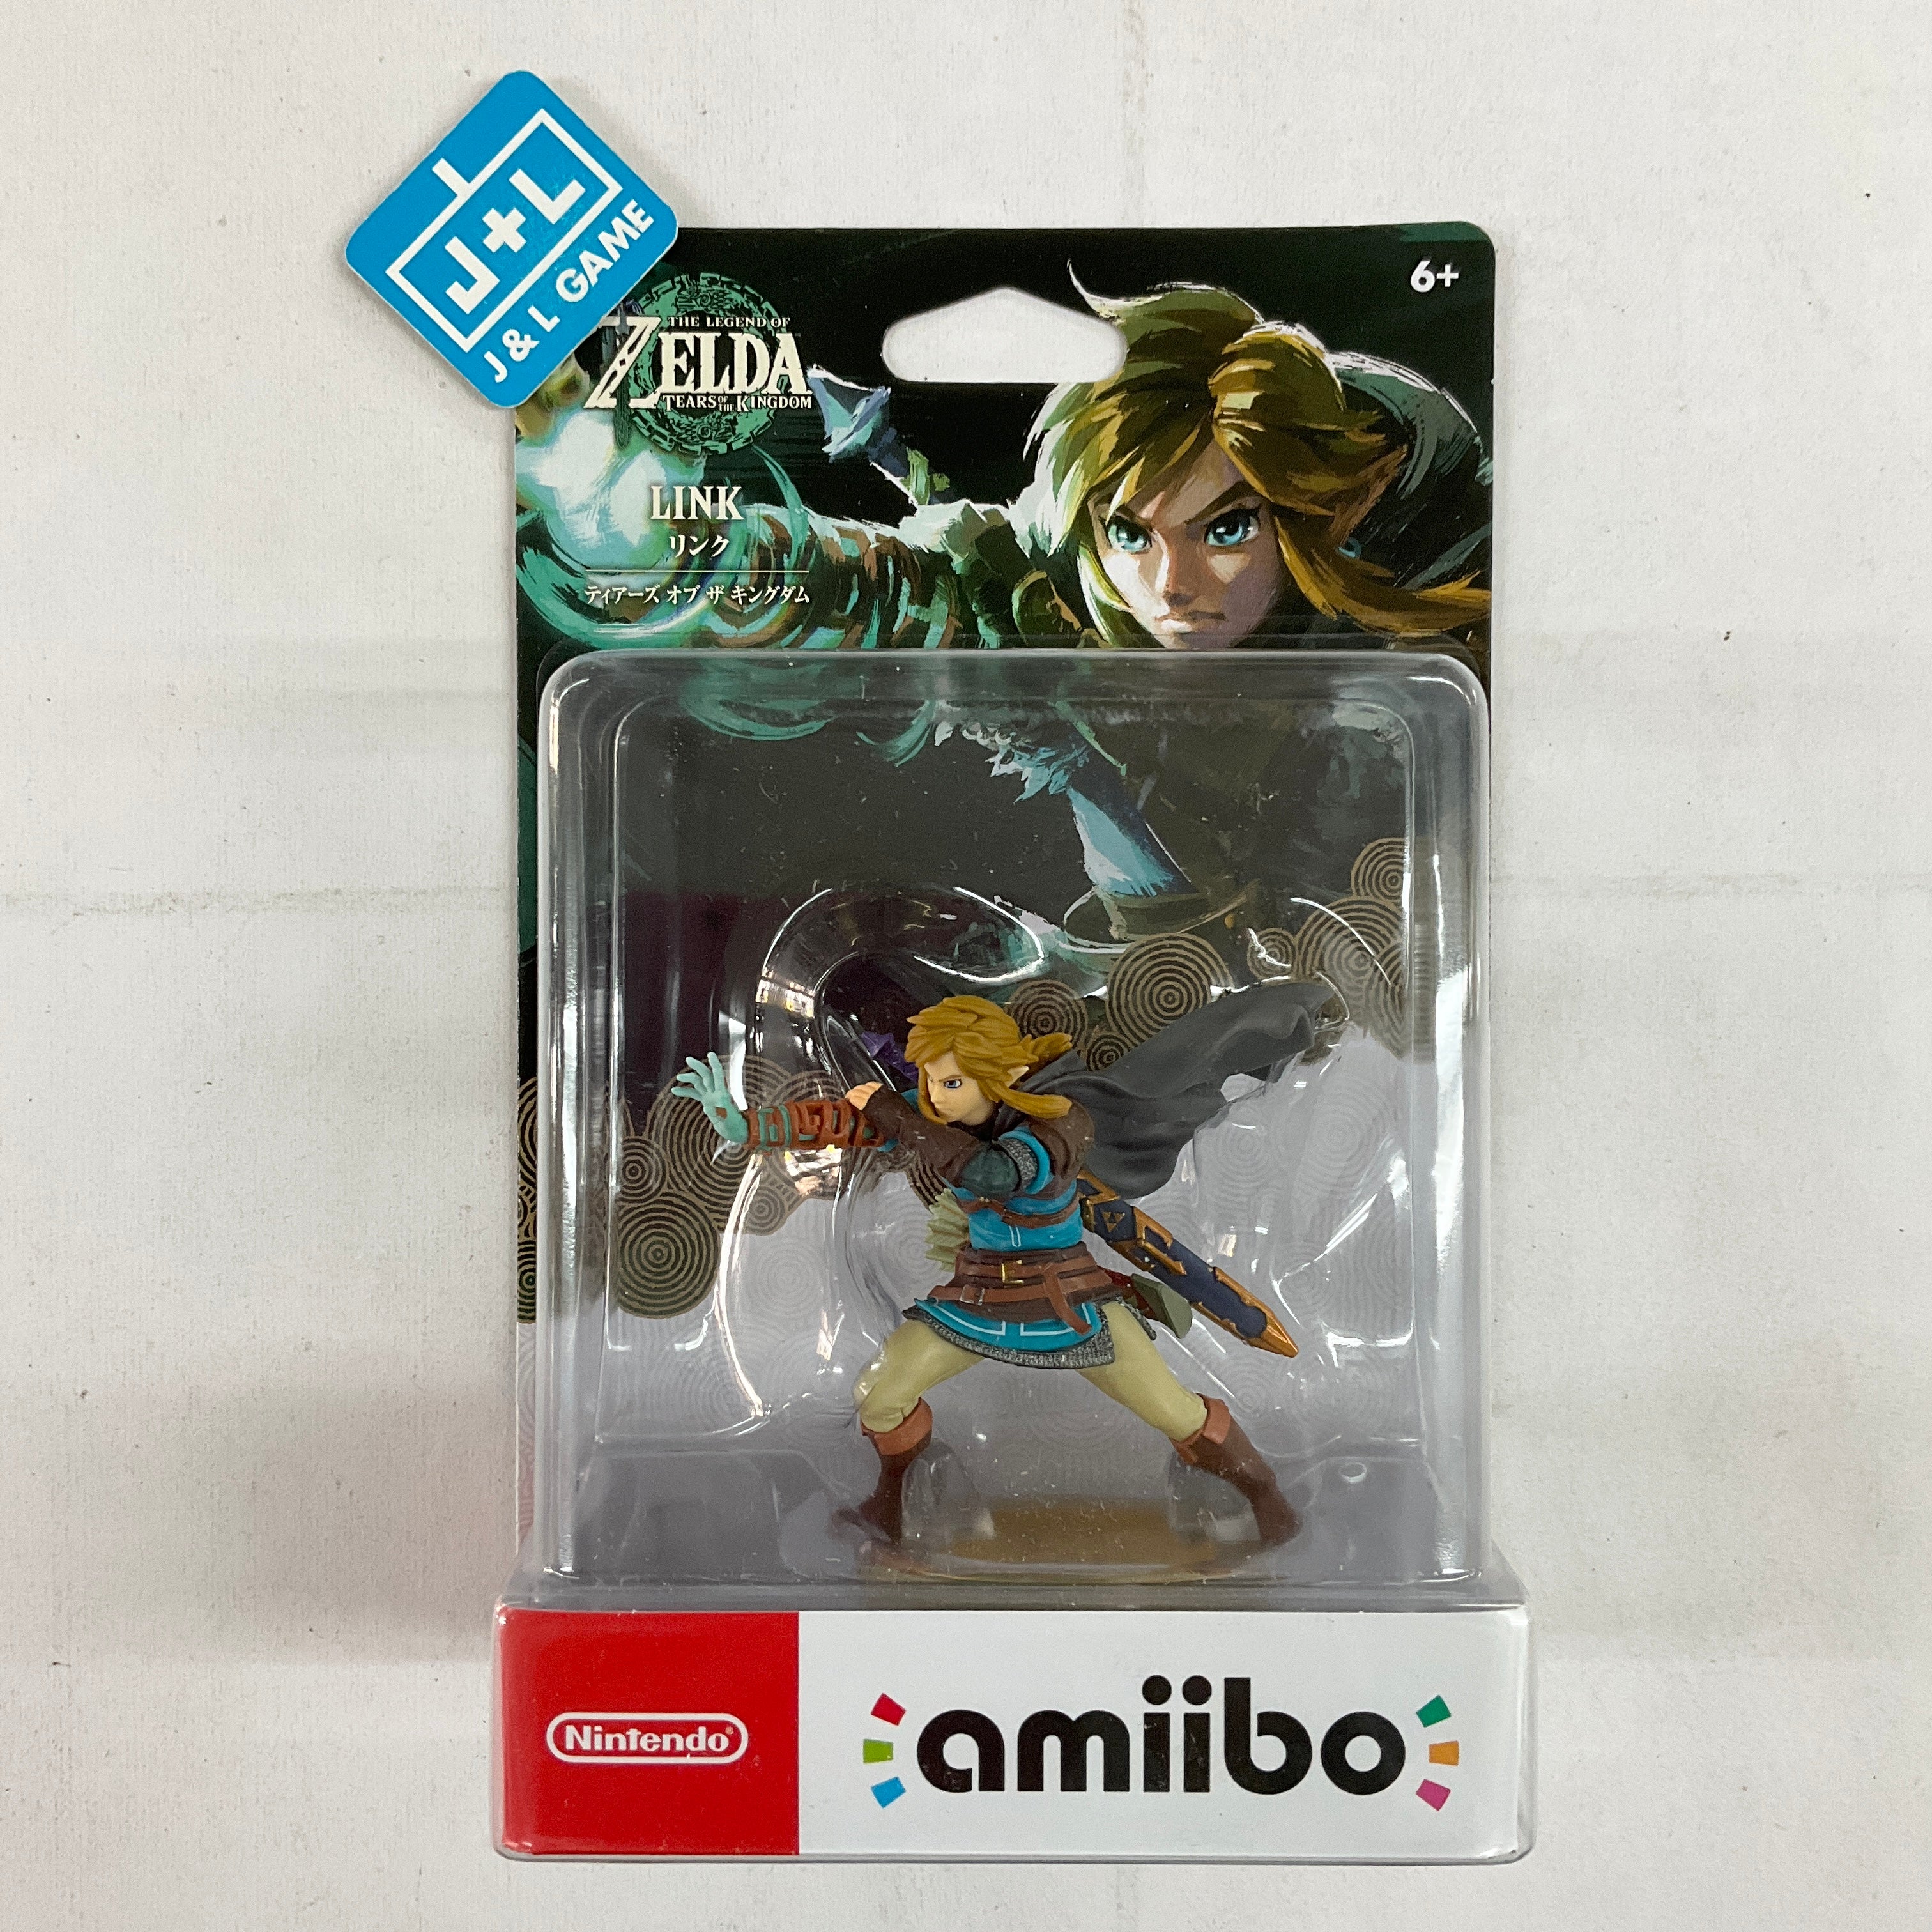 Nintendo amiibo - The Legend of Zelda Tears of the Kingdom - Link